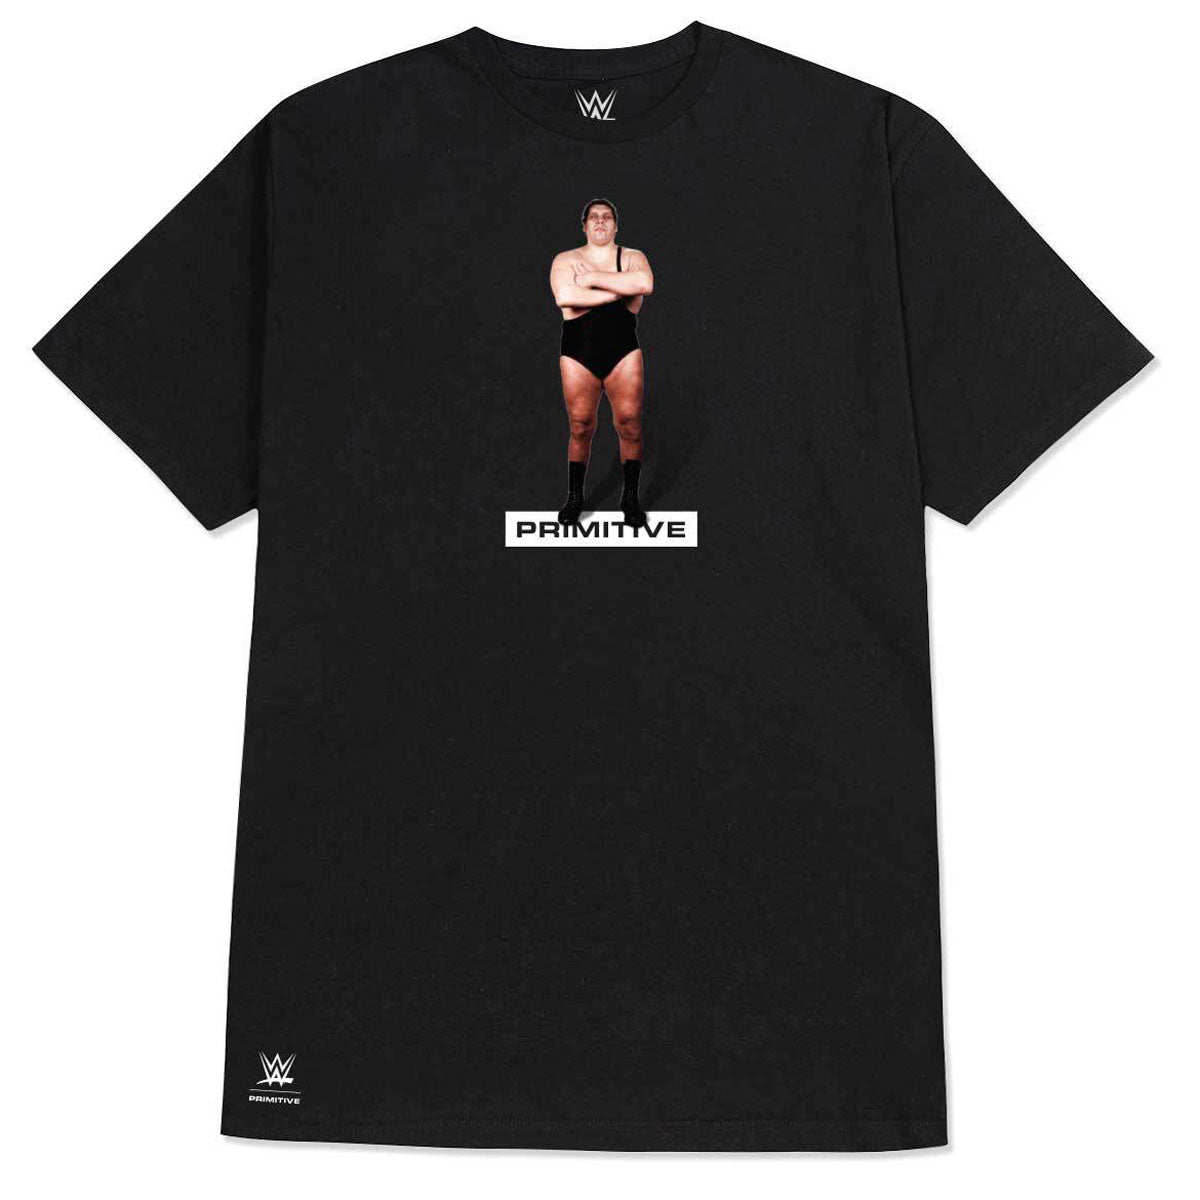 Primitive x WWE Giant T-Shirt - Black image 1